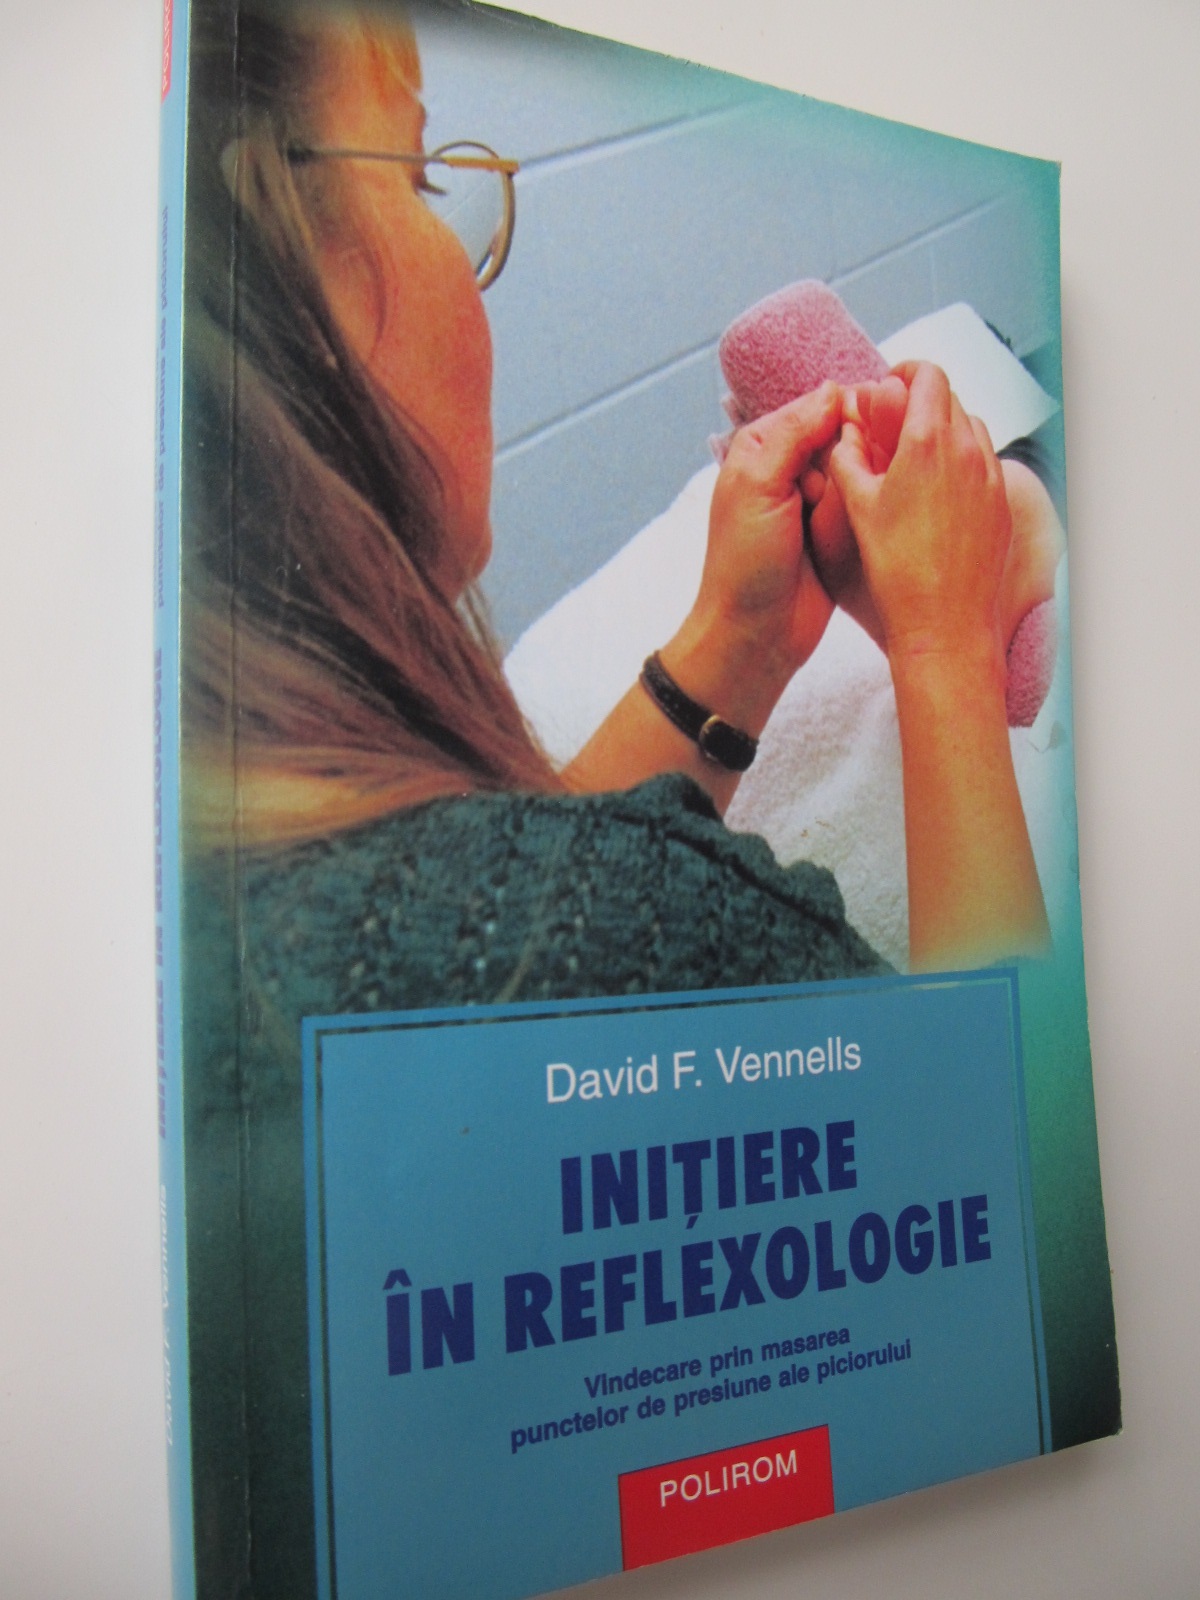 Initiere in reflexologie - David F. Vennells | Detalii carte